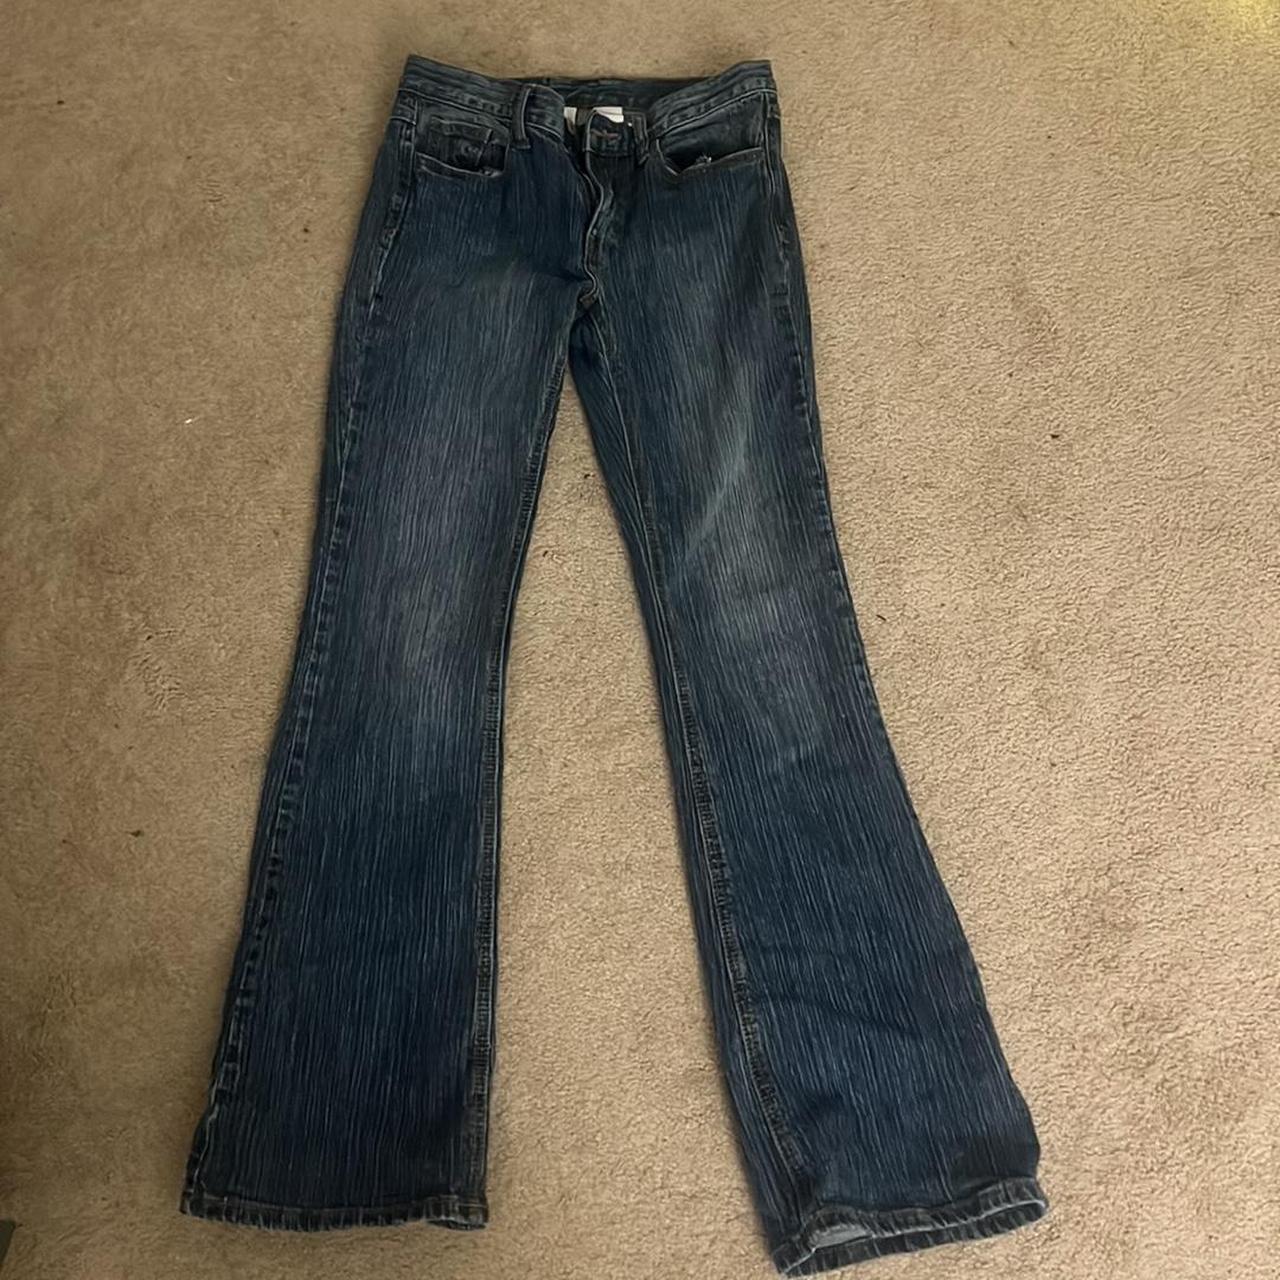 Brandy Melville low rise flare jeans - Depop